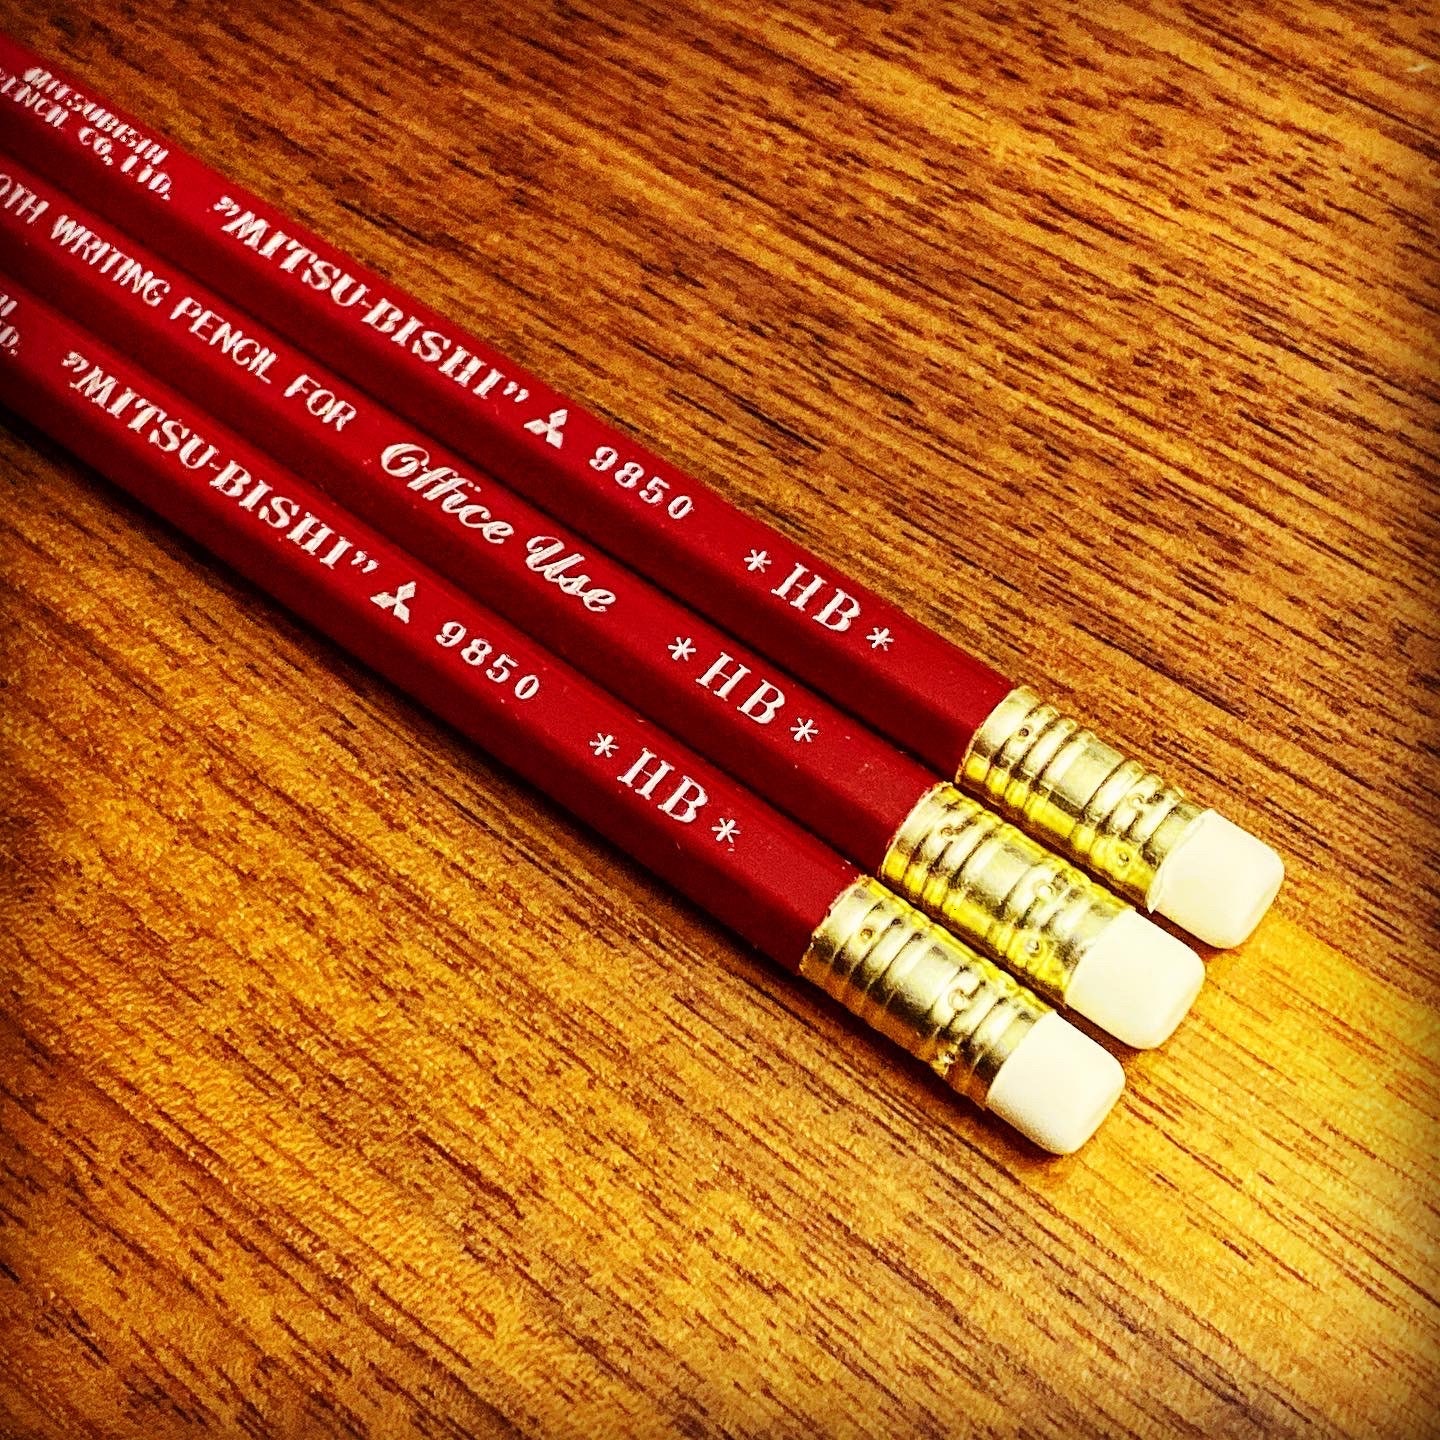 Kamikokuen Tombow Rare Black Mono Pencil Sampler Gift Set Rare Tombow  Pencils With Jismark -  Denmark